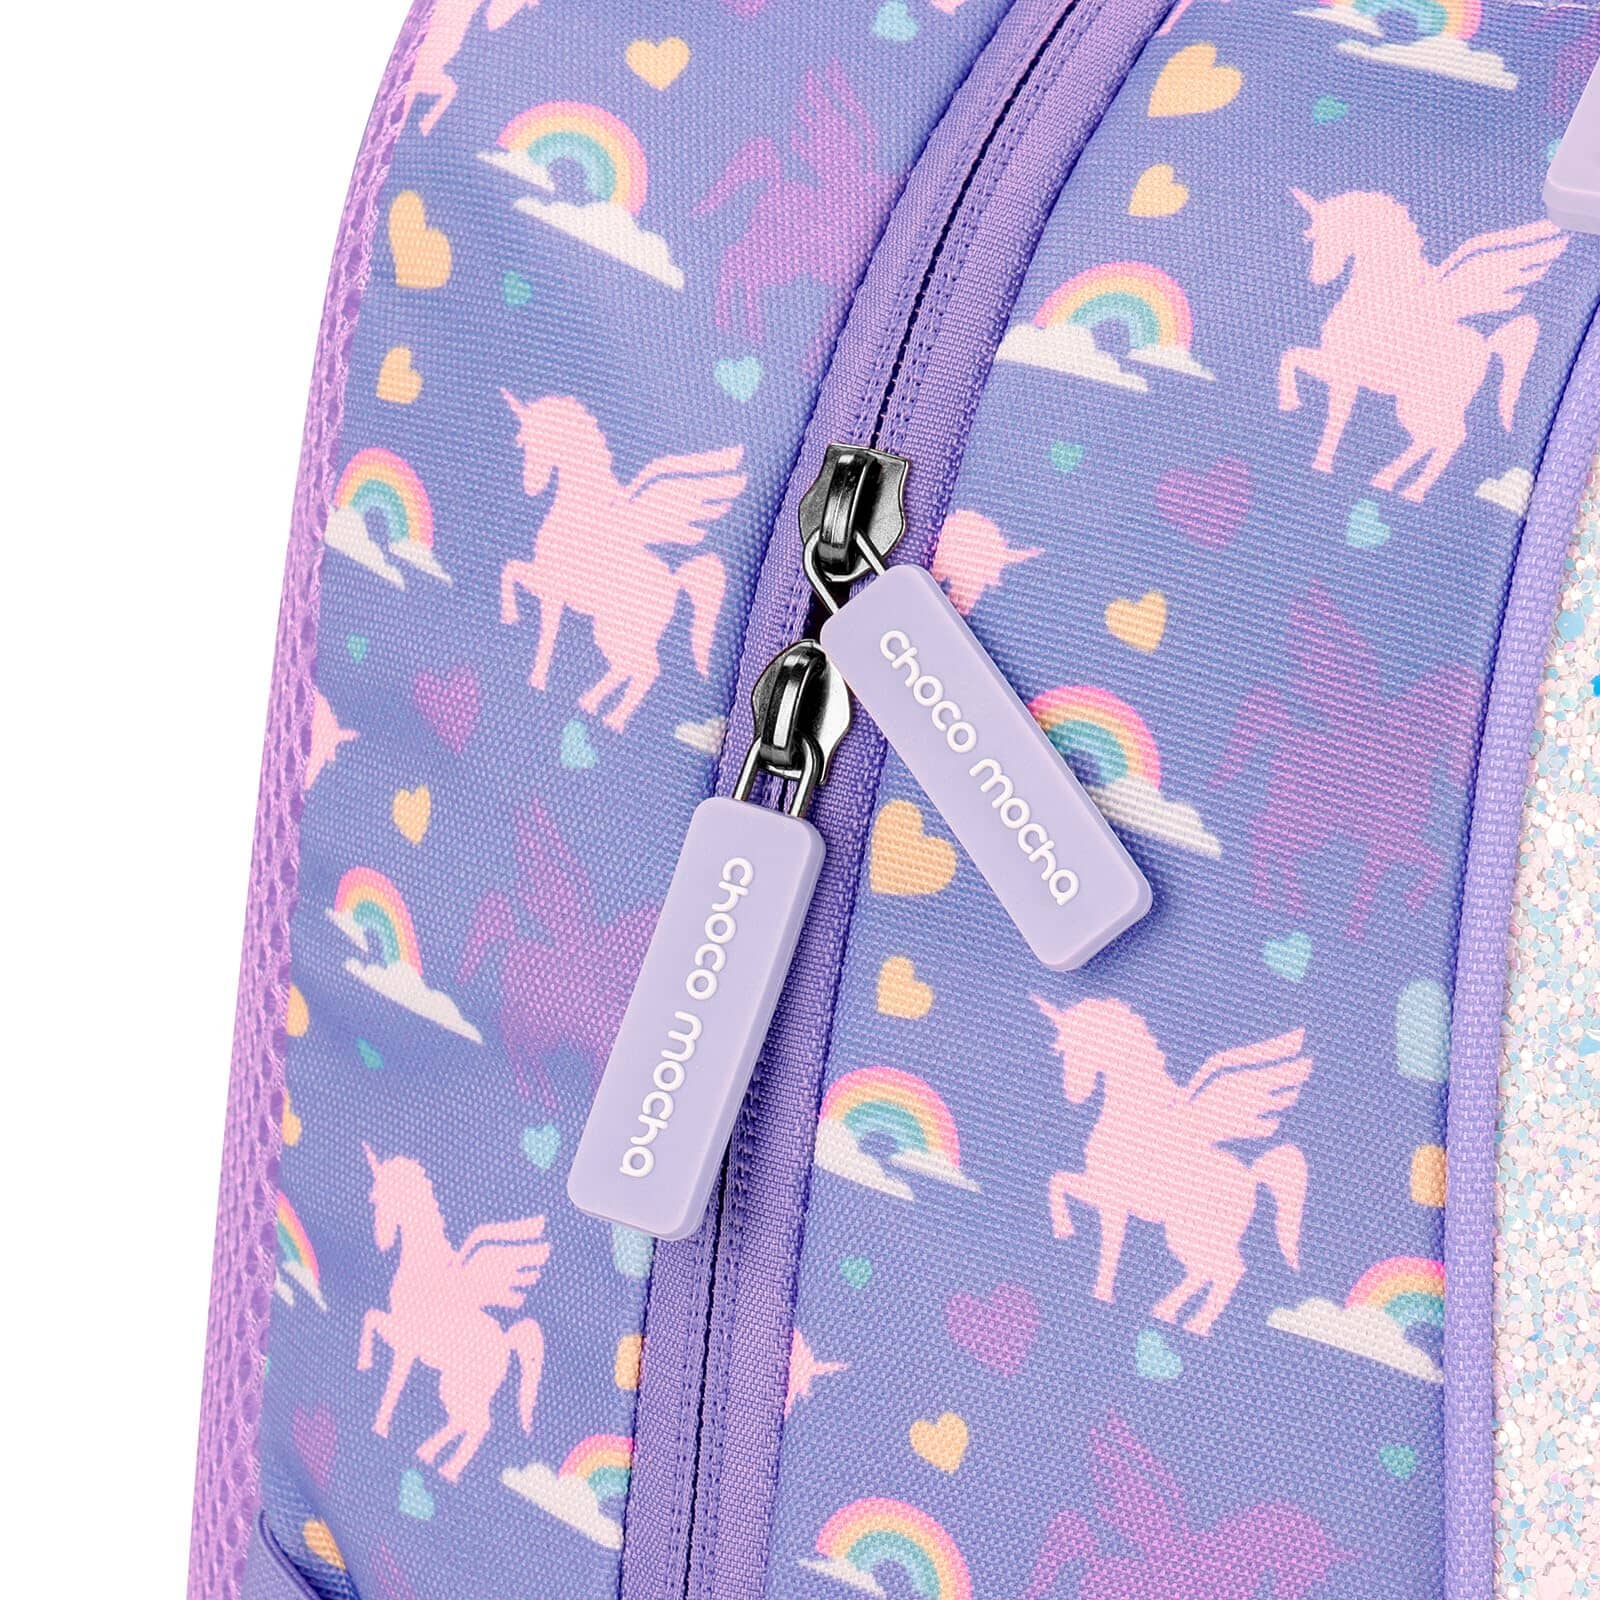 Choco Mocha Unicorn Toddler Backpack for Girls, Kids Preschool Backpack for Toddler Kindergarten Backpack 15 Inch, Glitter Purple chocomochakids 